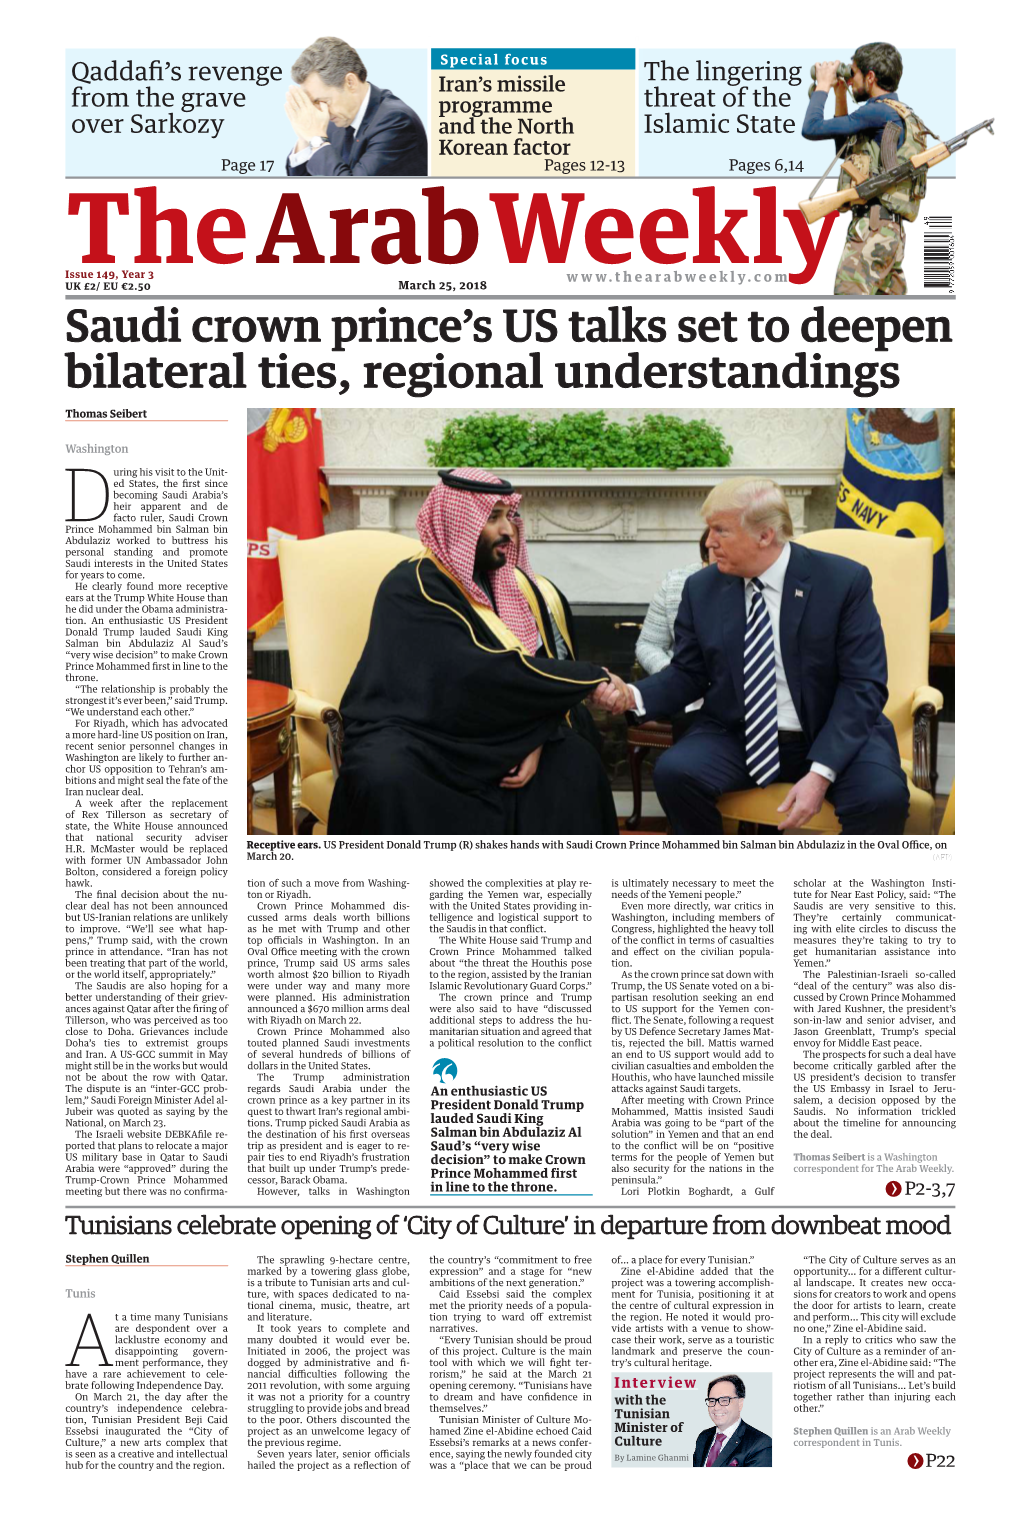 Saudi Crown Prince's US Talks Set to Deepen Bilateral Ties, Regional